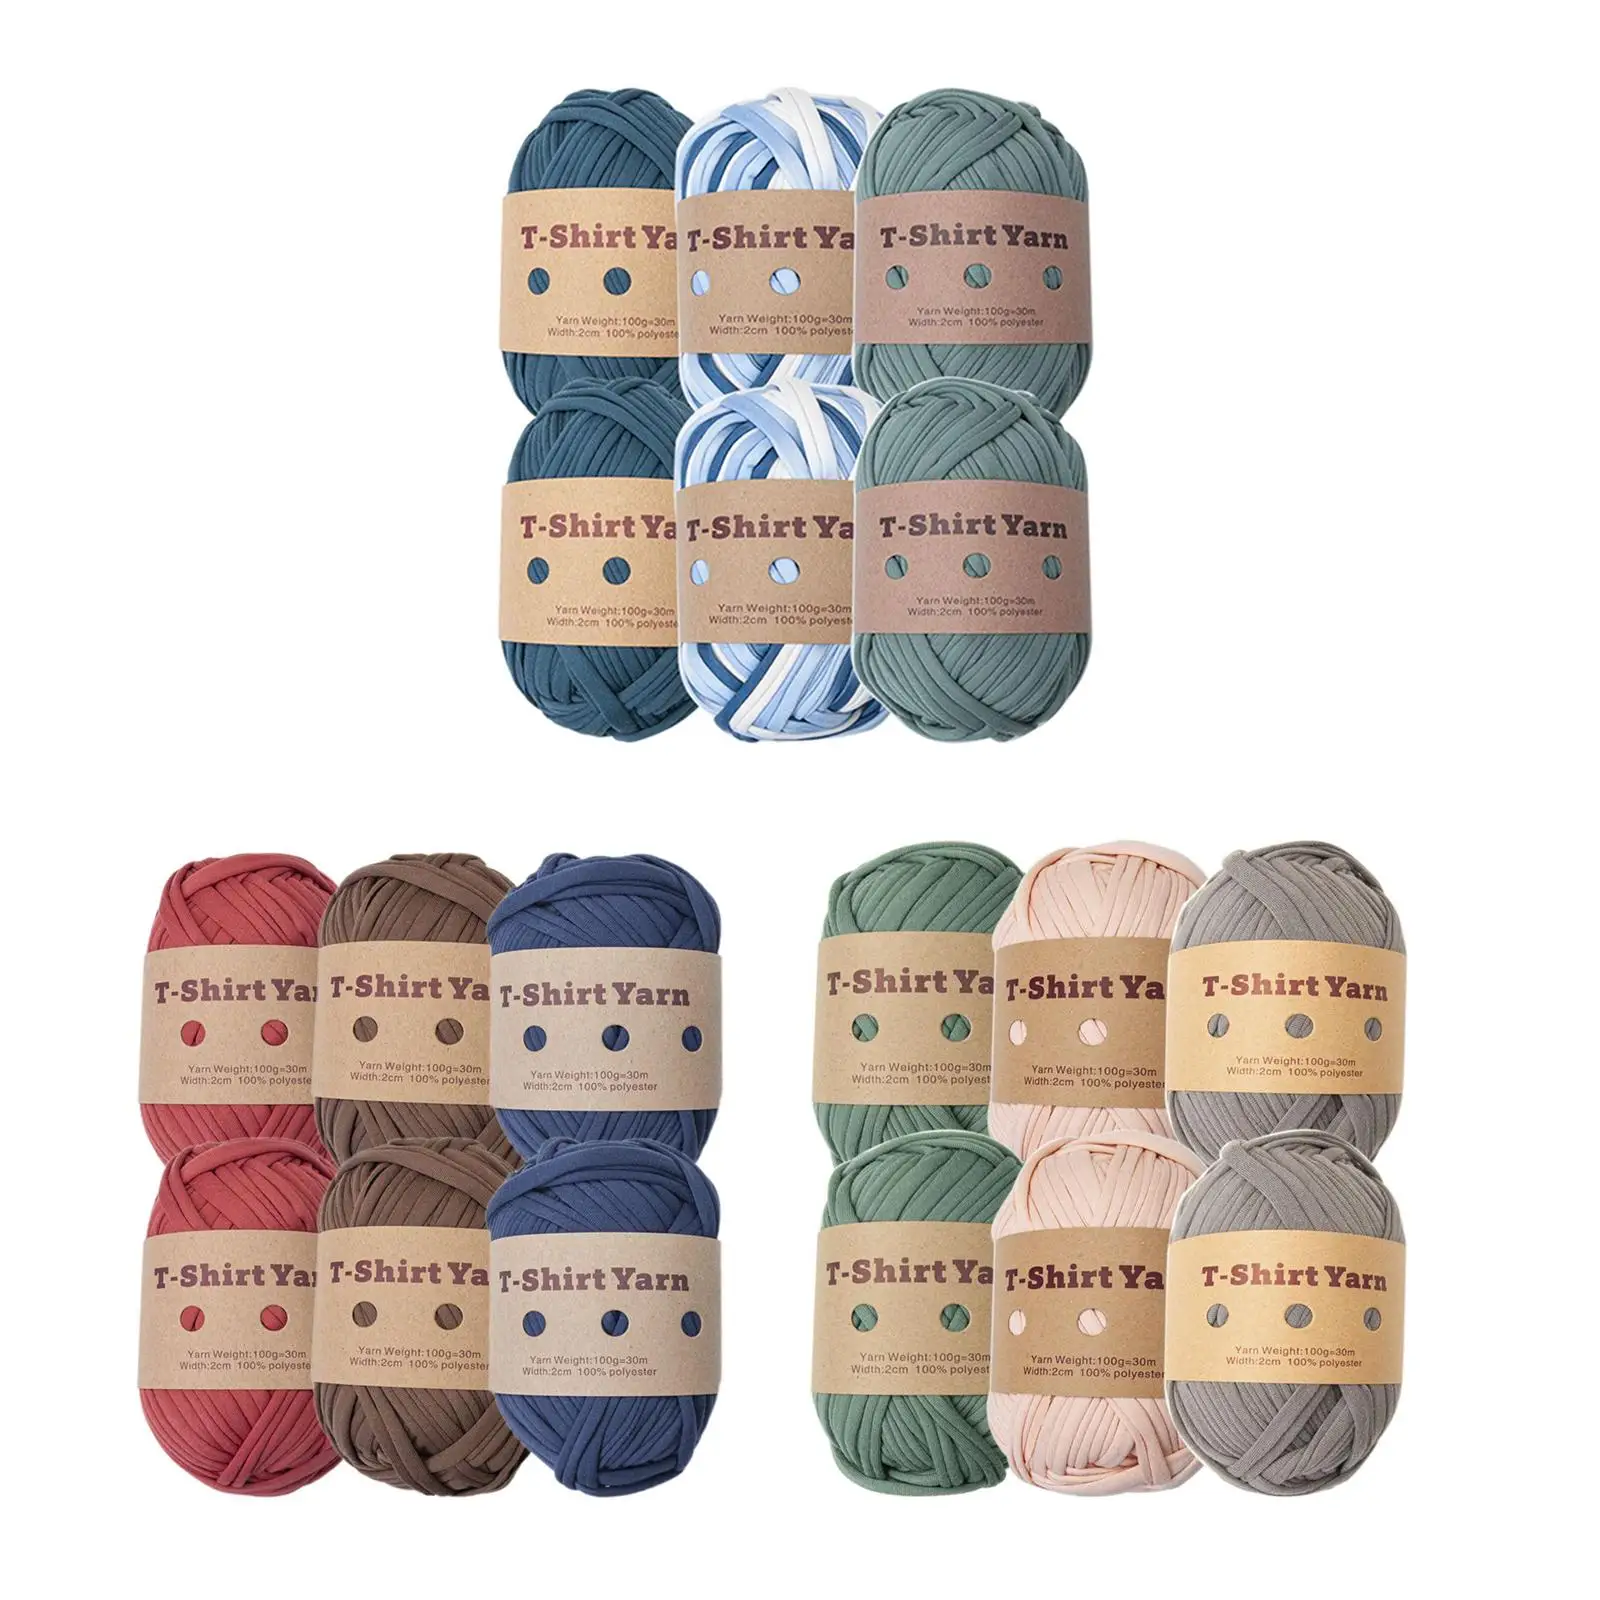 6x T Shirt Yarn Bag Making Supplies Crocheting Hand Knit Three Color Easy to